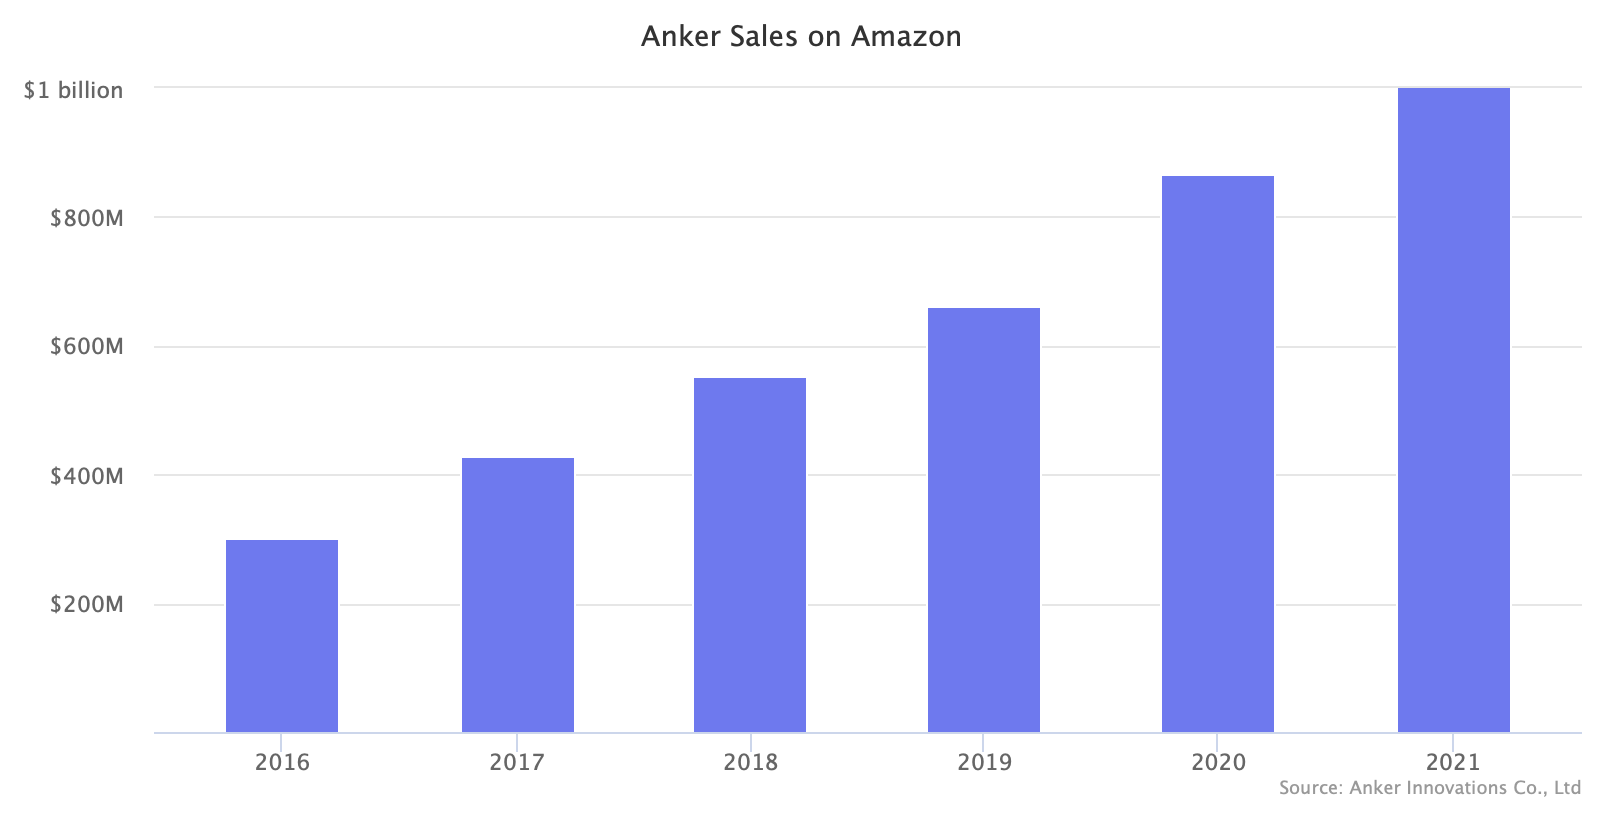 Anker Sales on Amazon